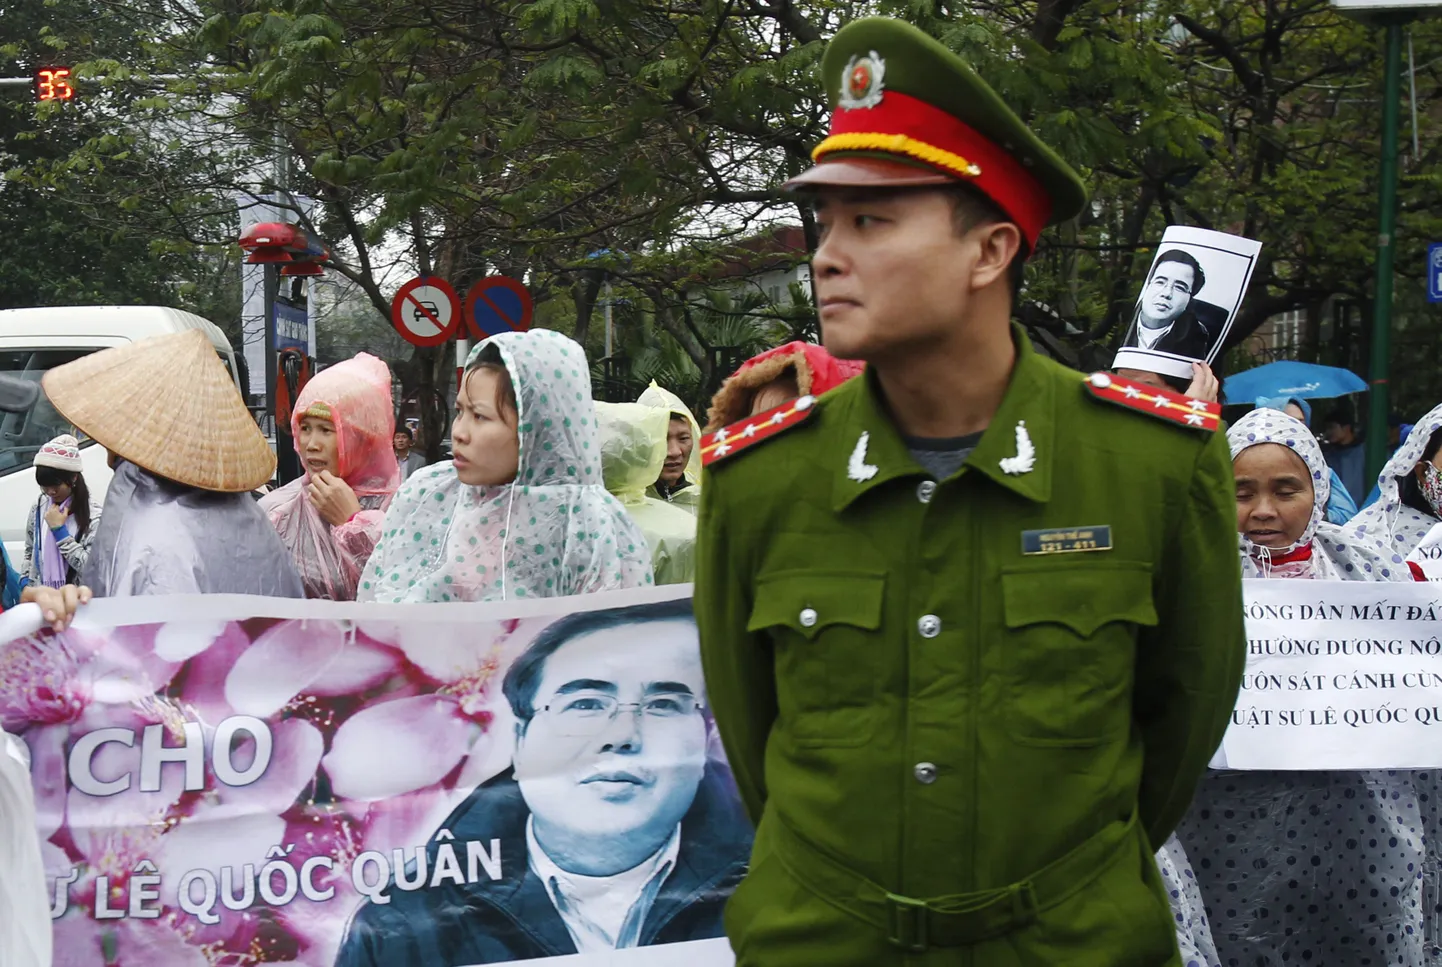 Vietnami politsenikik. Foto on illustreeriv.